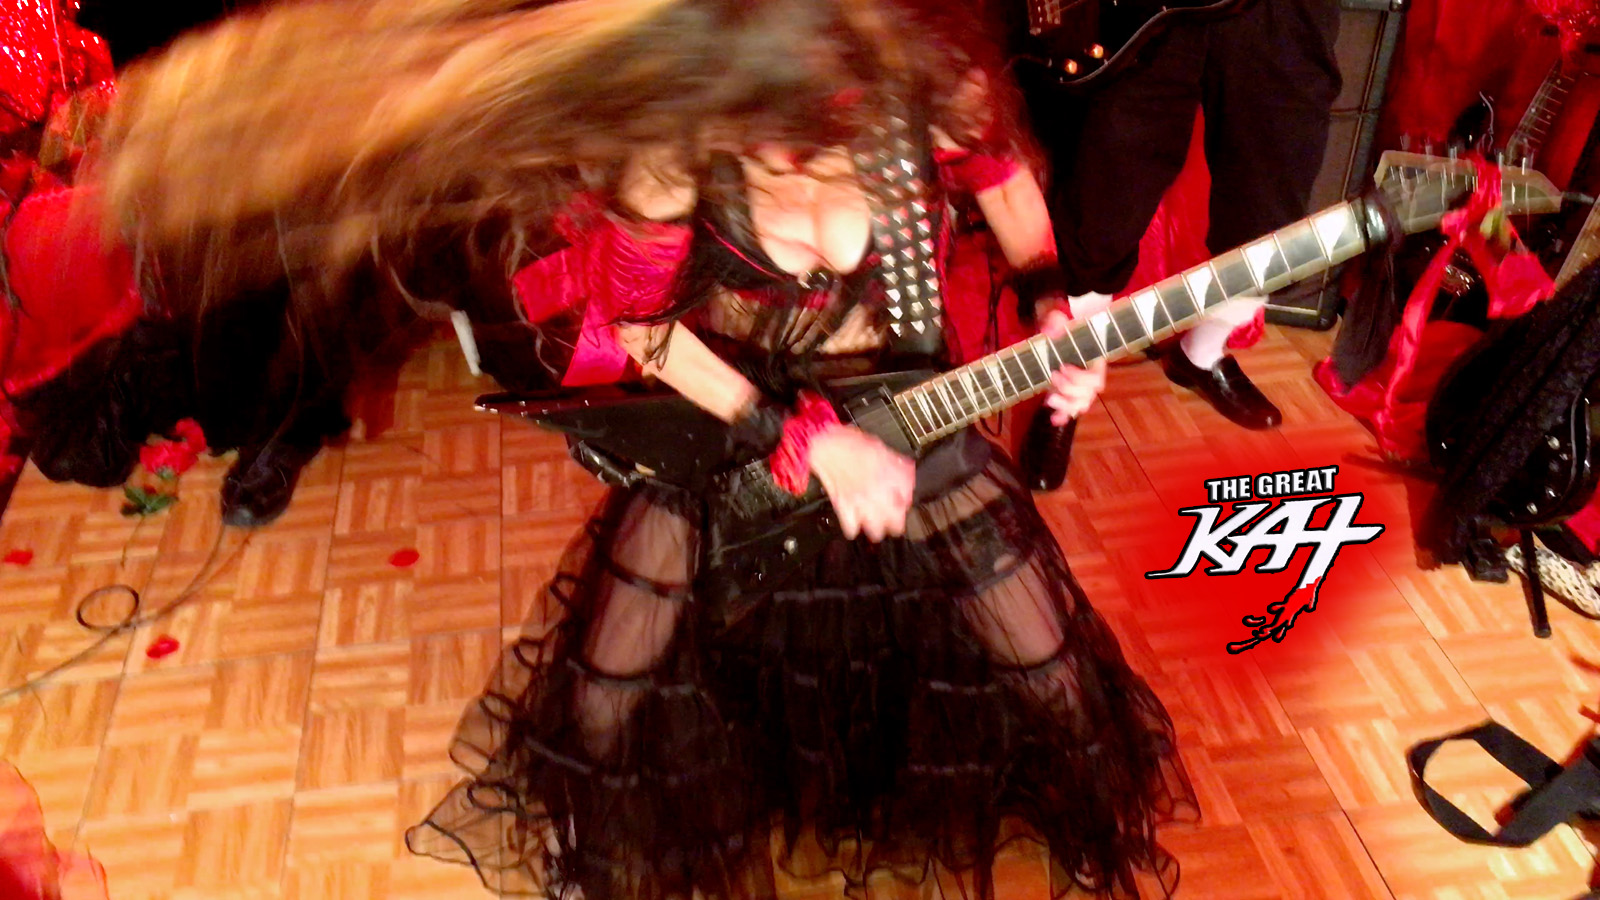 SHREDDING SENORITA!! The Great Kat's SARASATE'S "CARMEN FANTASY" MUSIC VIDEO!